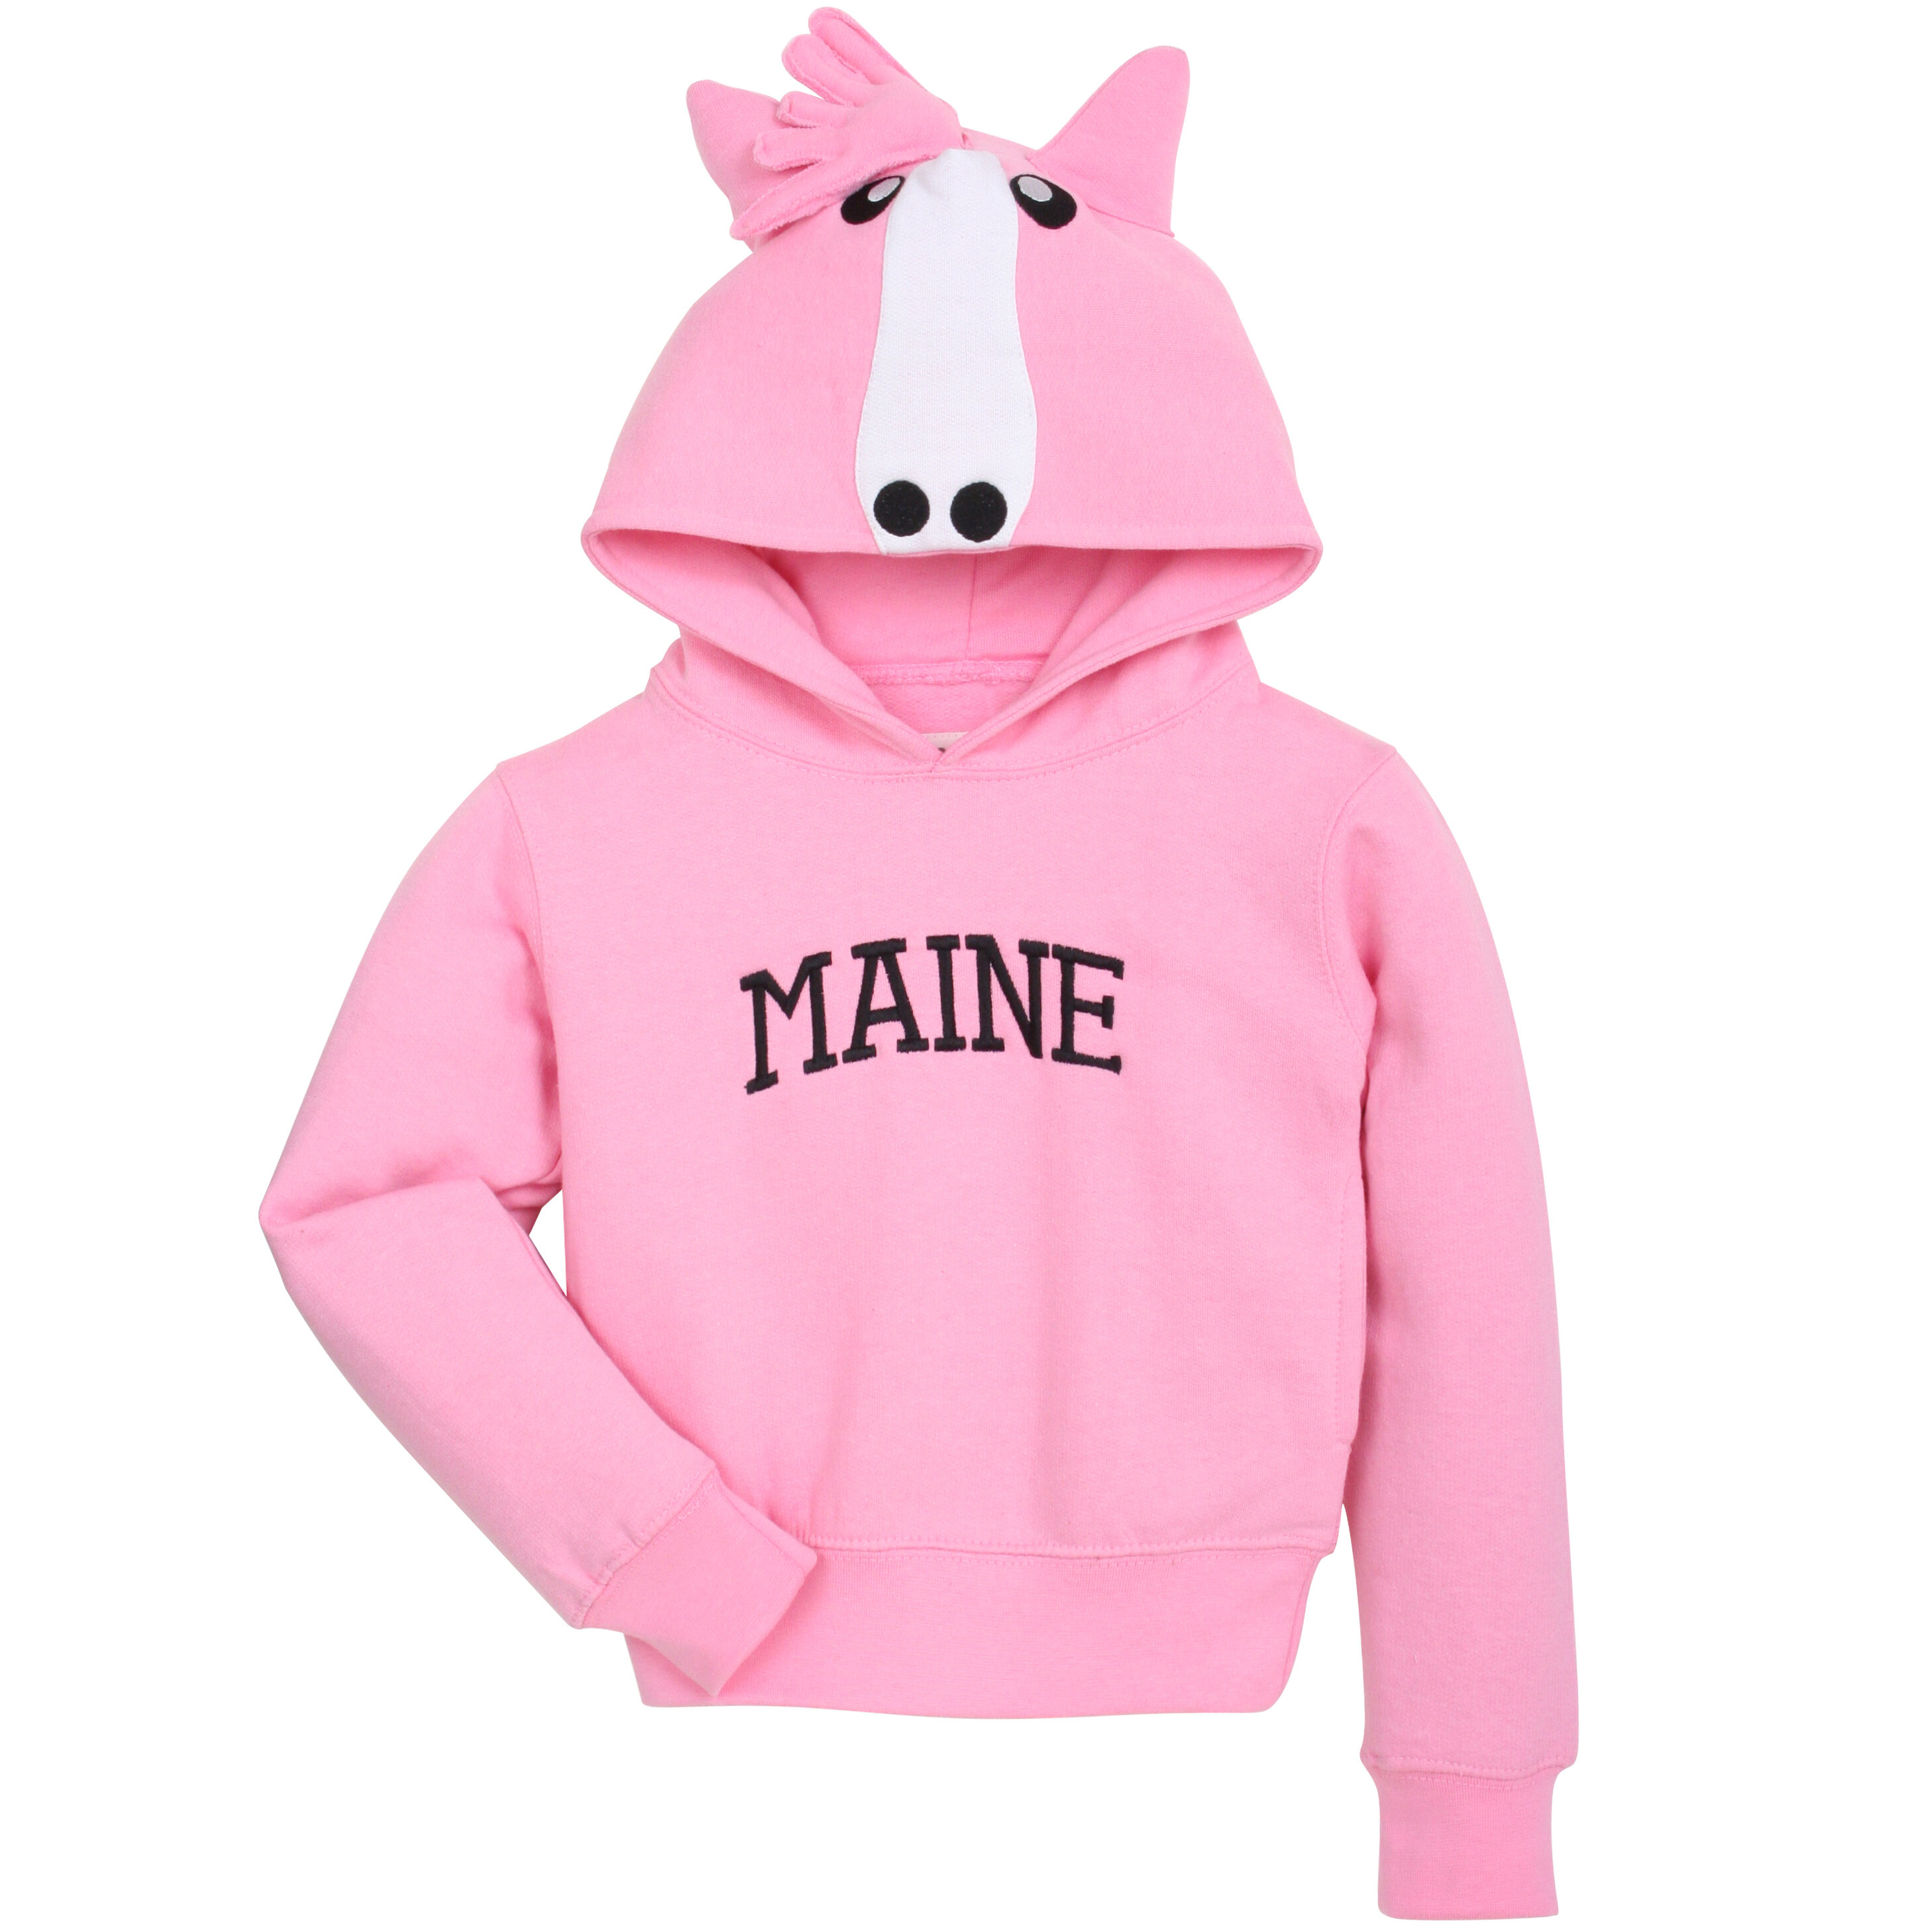 Dujiea Llama Cactus Pink Hoodies Hoody Pullover Sweatshirts with Pockets for Girls Boys Kids